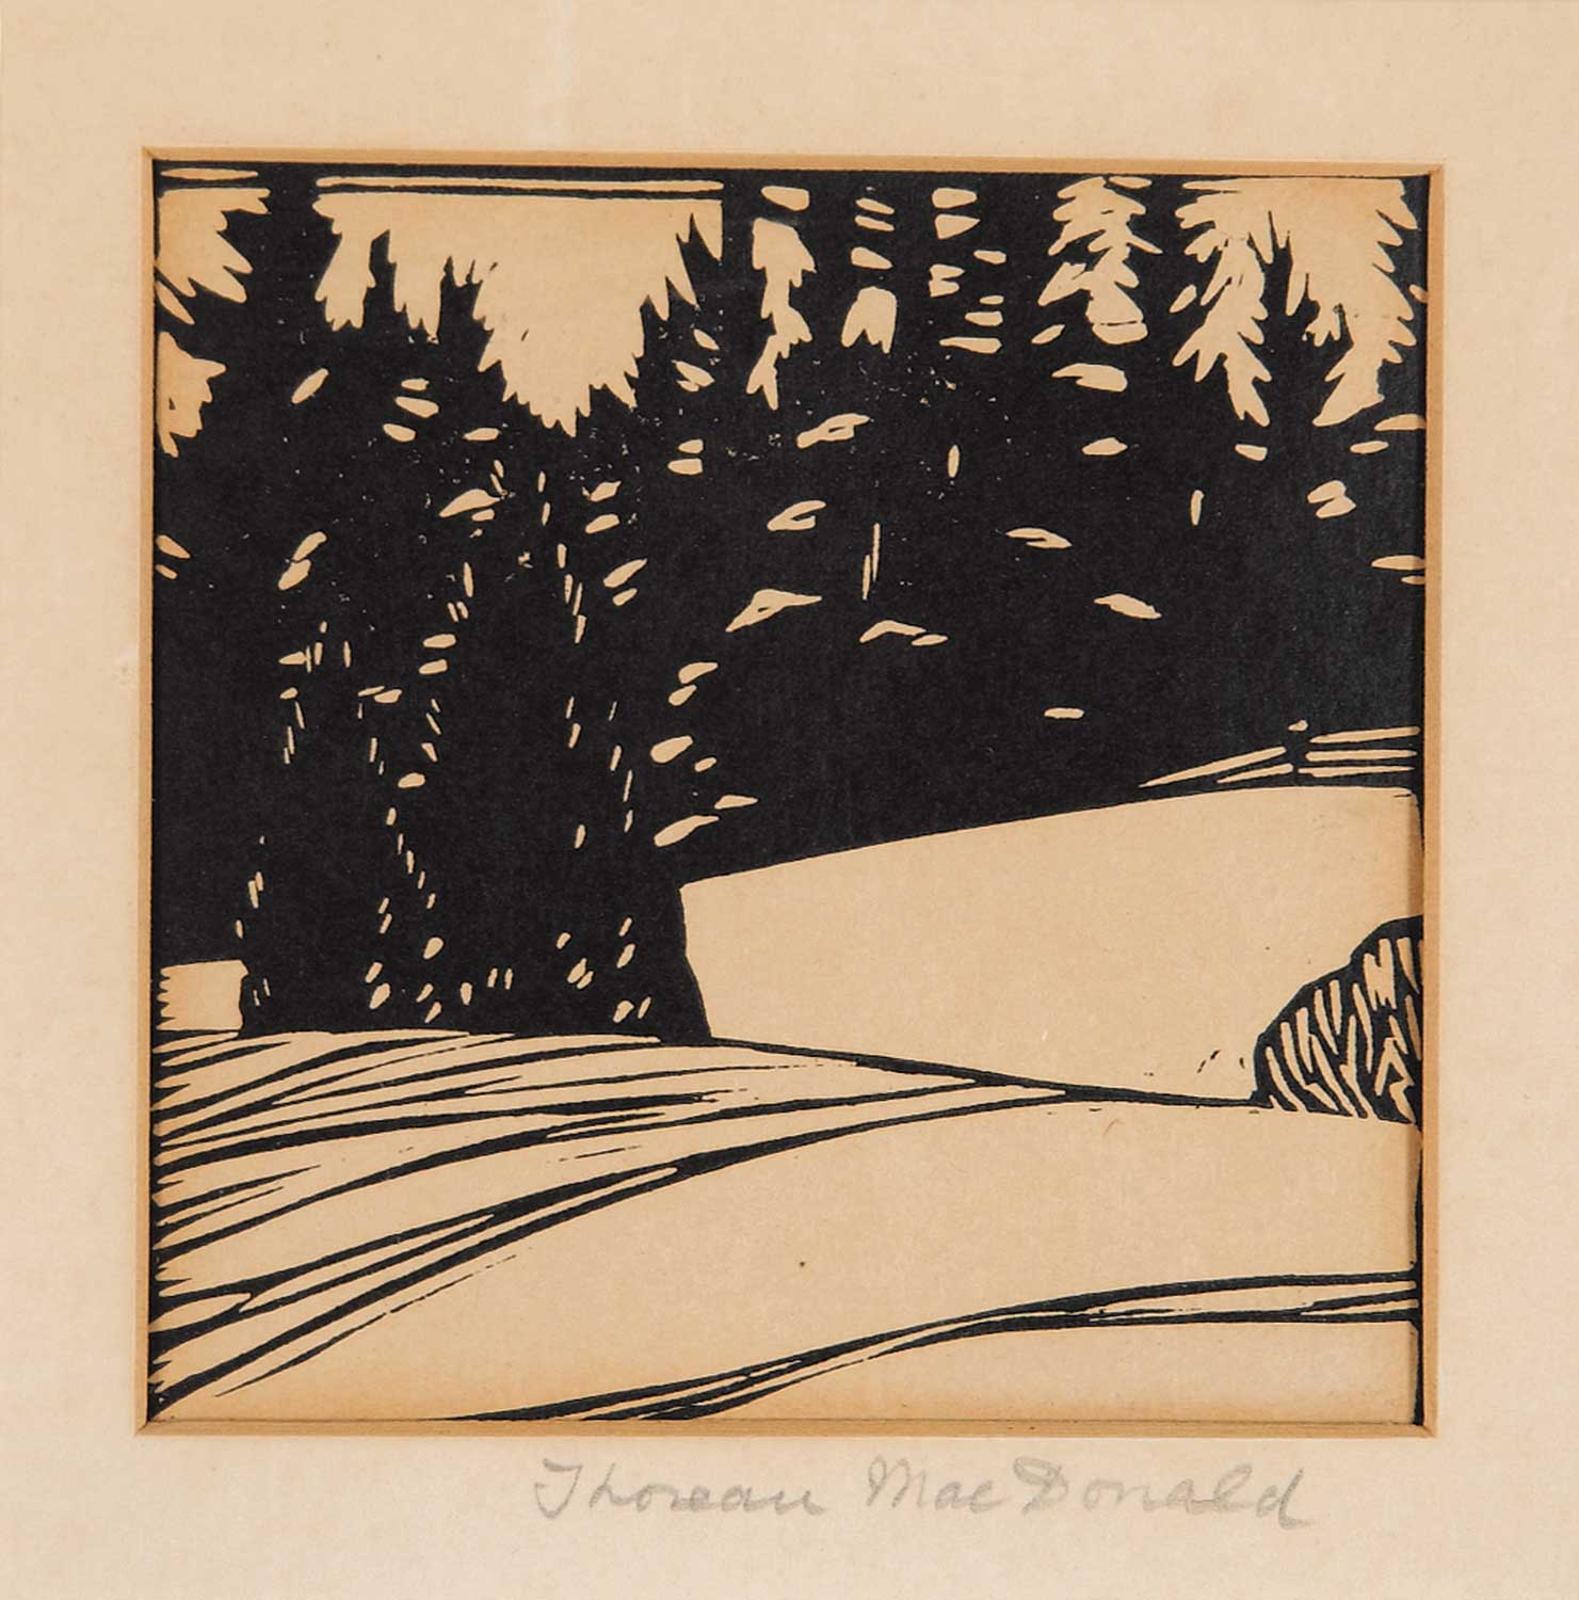 Thoreau MacDonald (1901-1989) - Untitled - In Winter